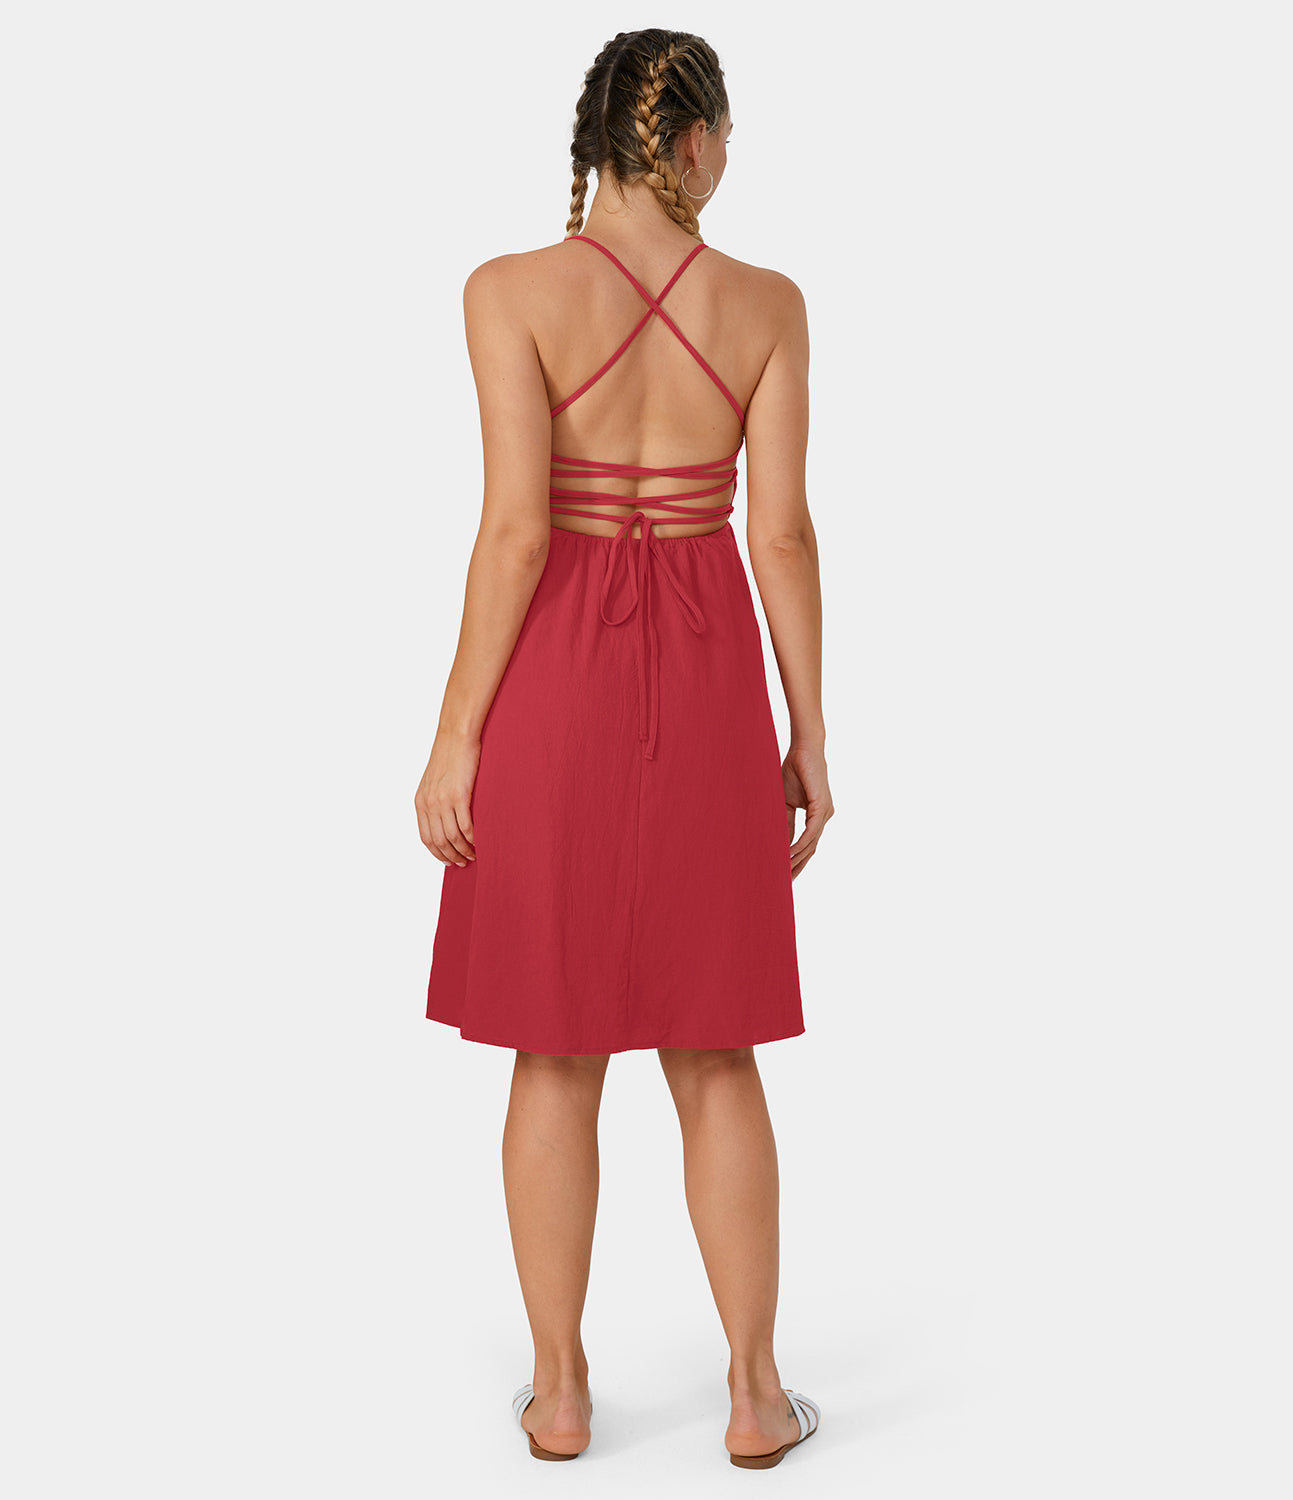 

Halara Backless Crisscross Tie Back Ruched Casual Midi Dress Casual Dress - Equestrian Red -  slip dress beach dress ruched dress